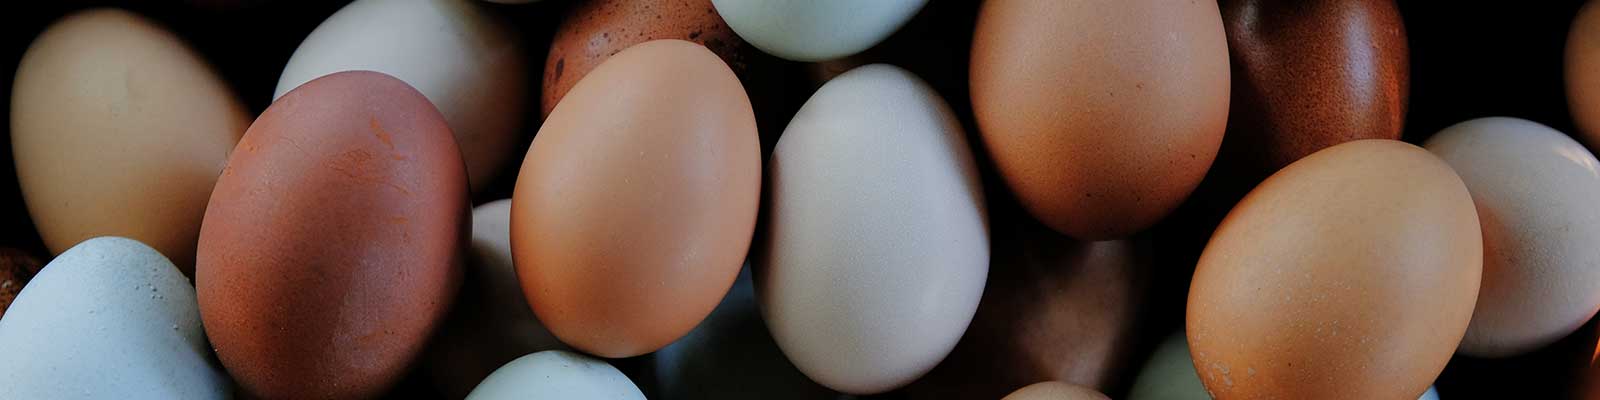 Hatch Eggs